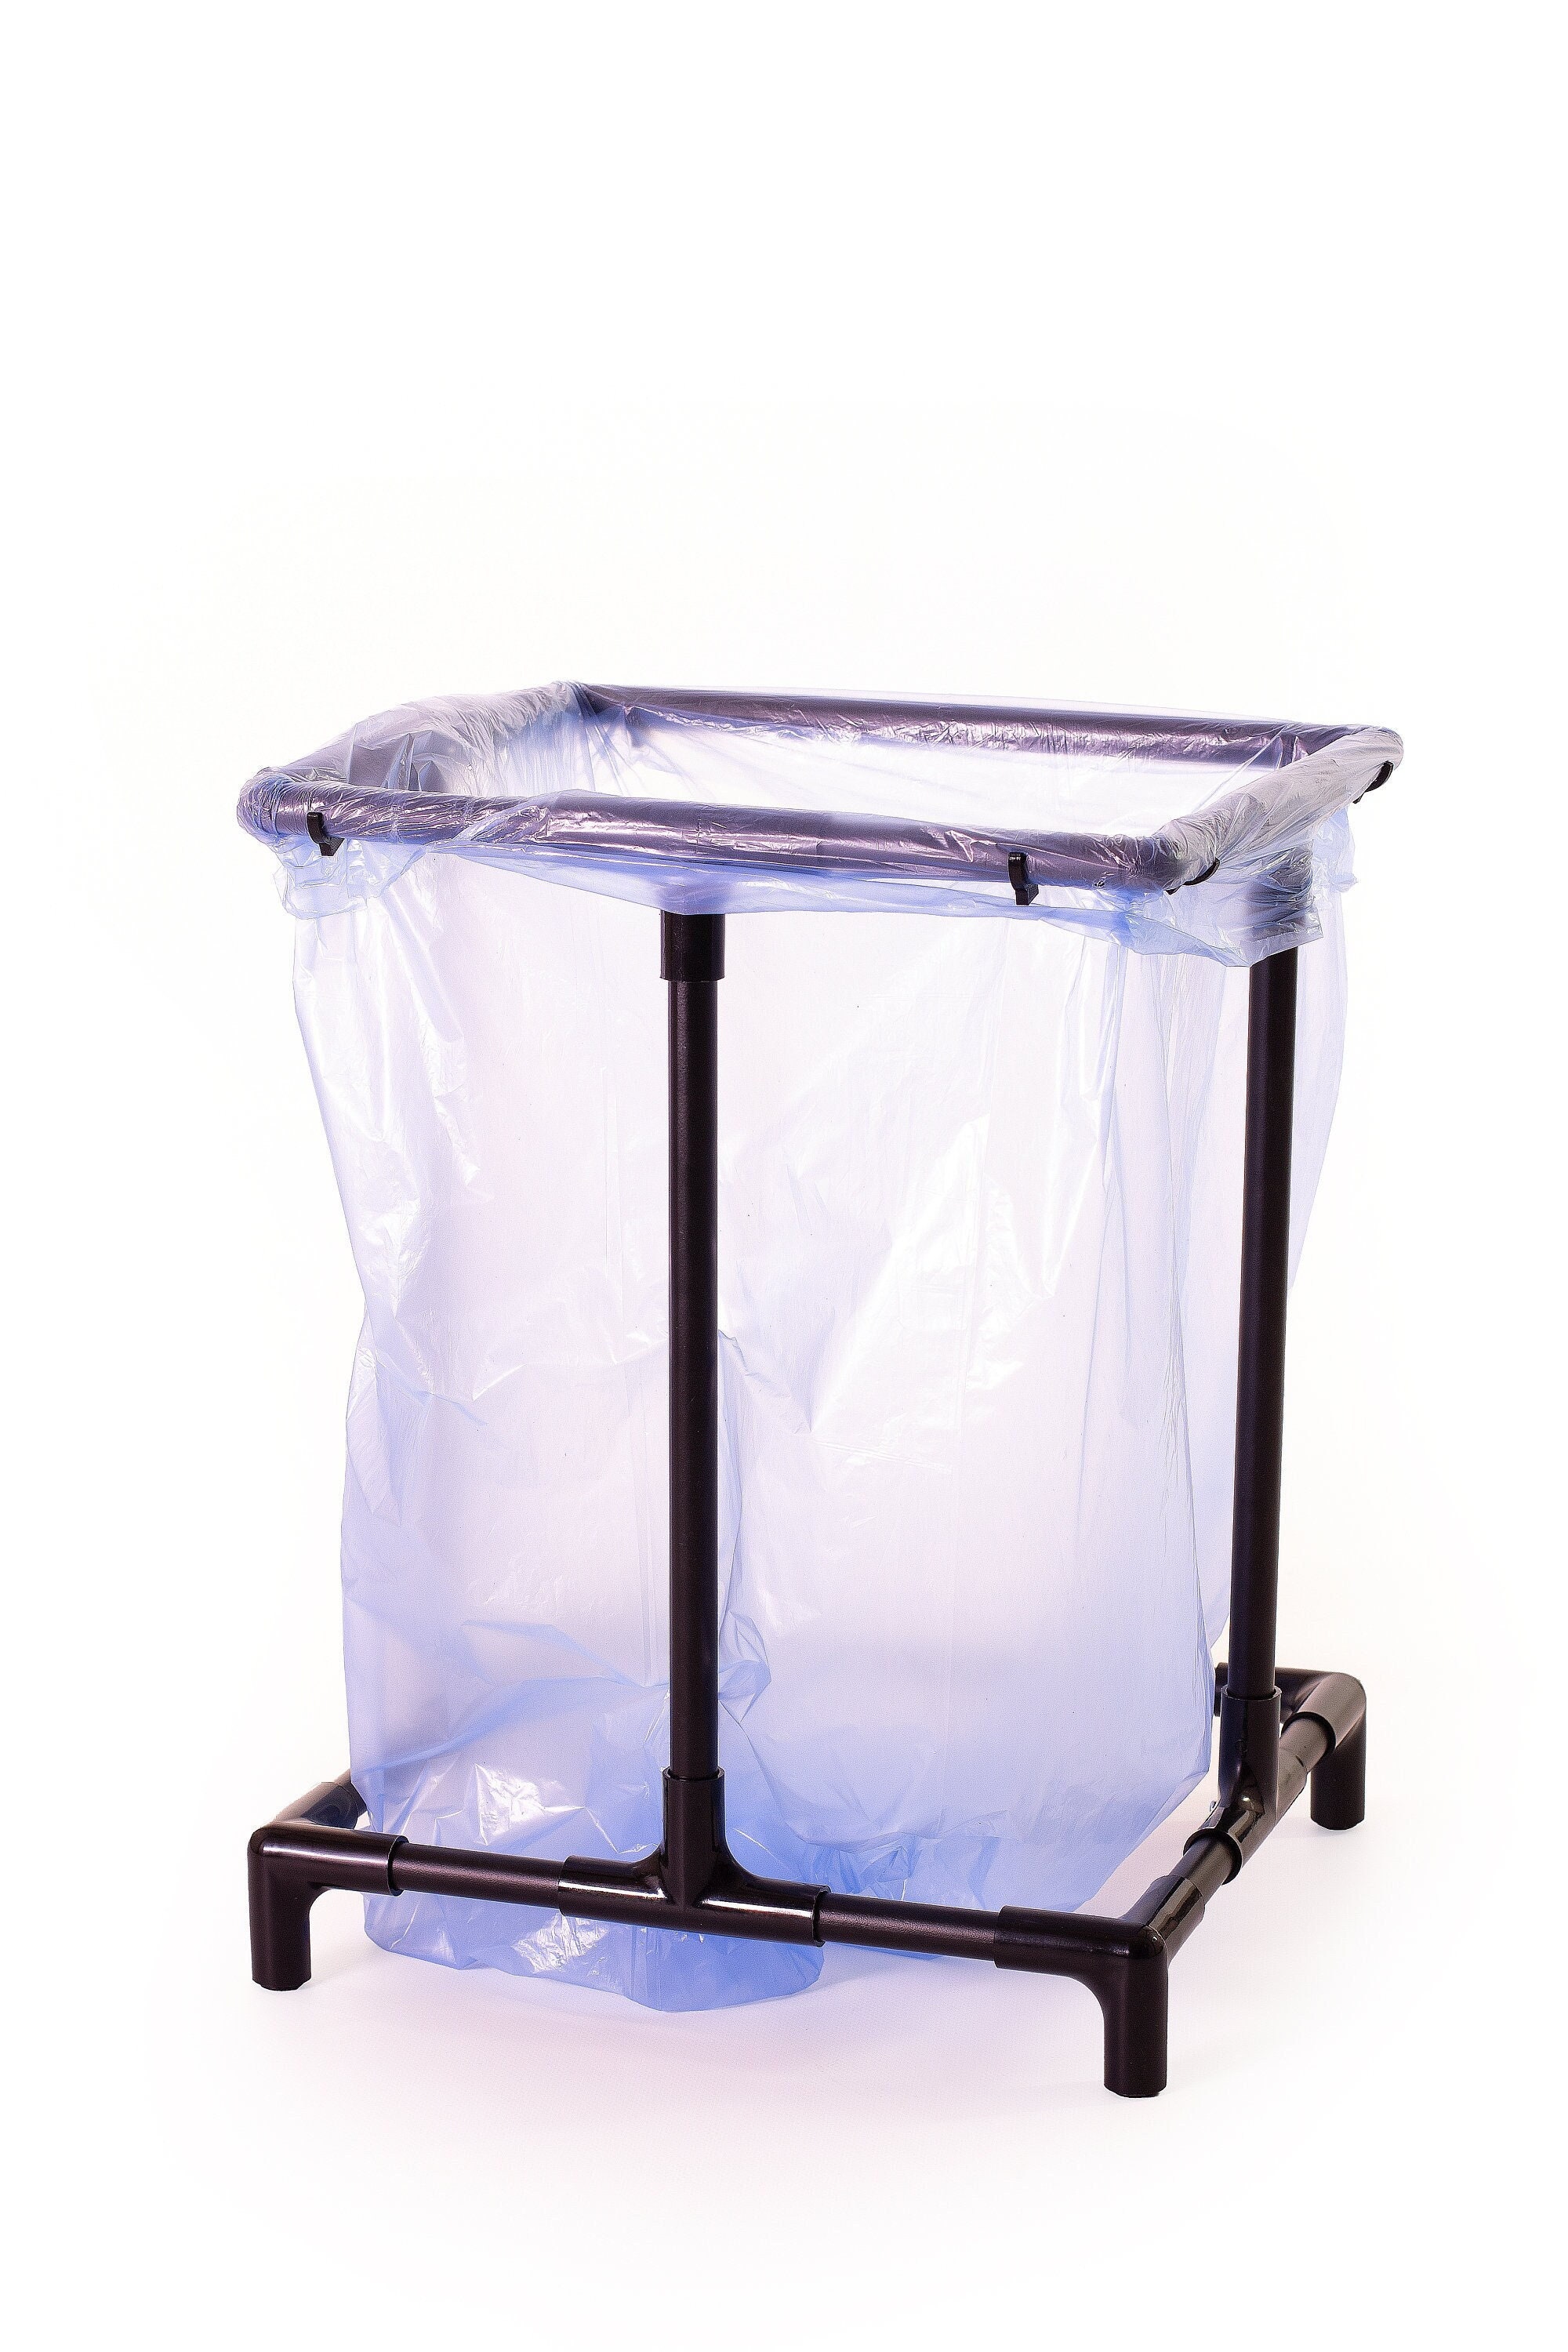 3D gedruckter Müllsack Plastik-Abfallbeutel-Spender/Organizer